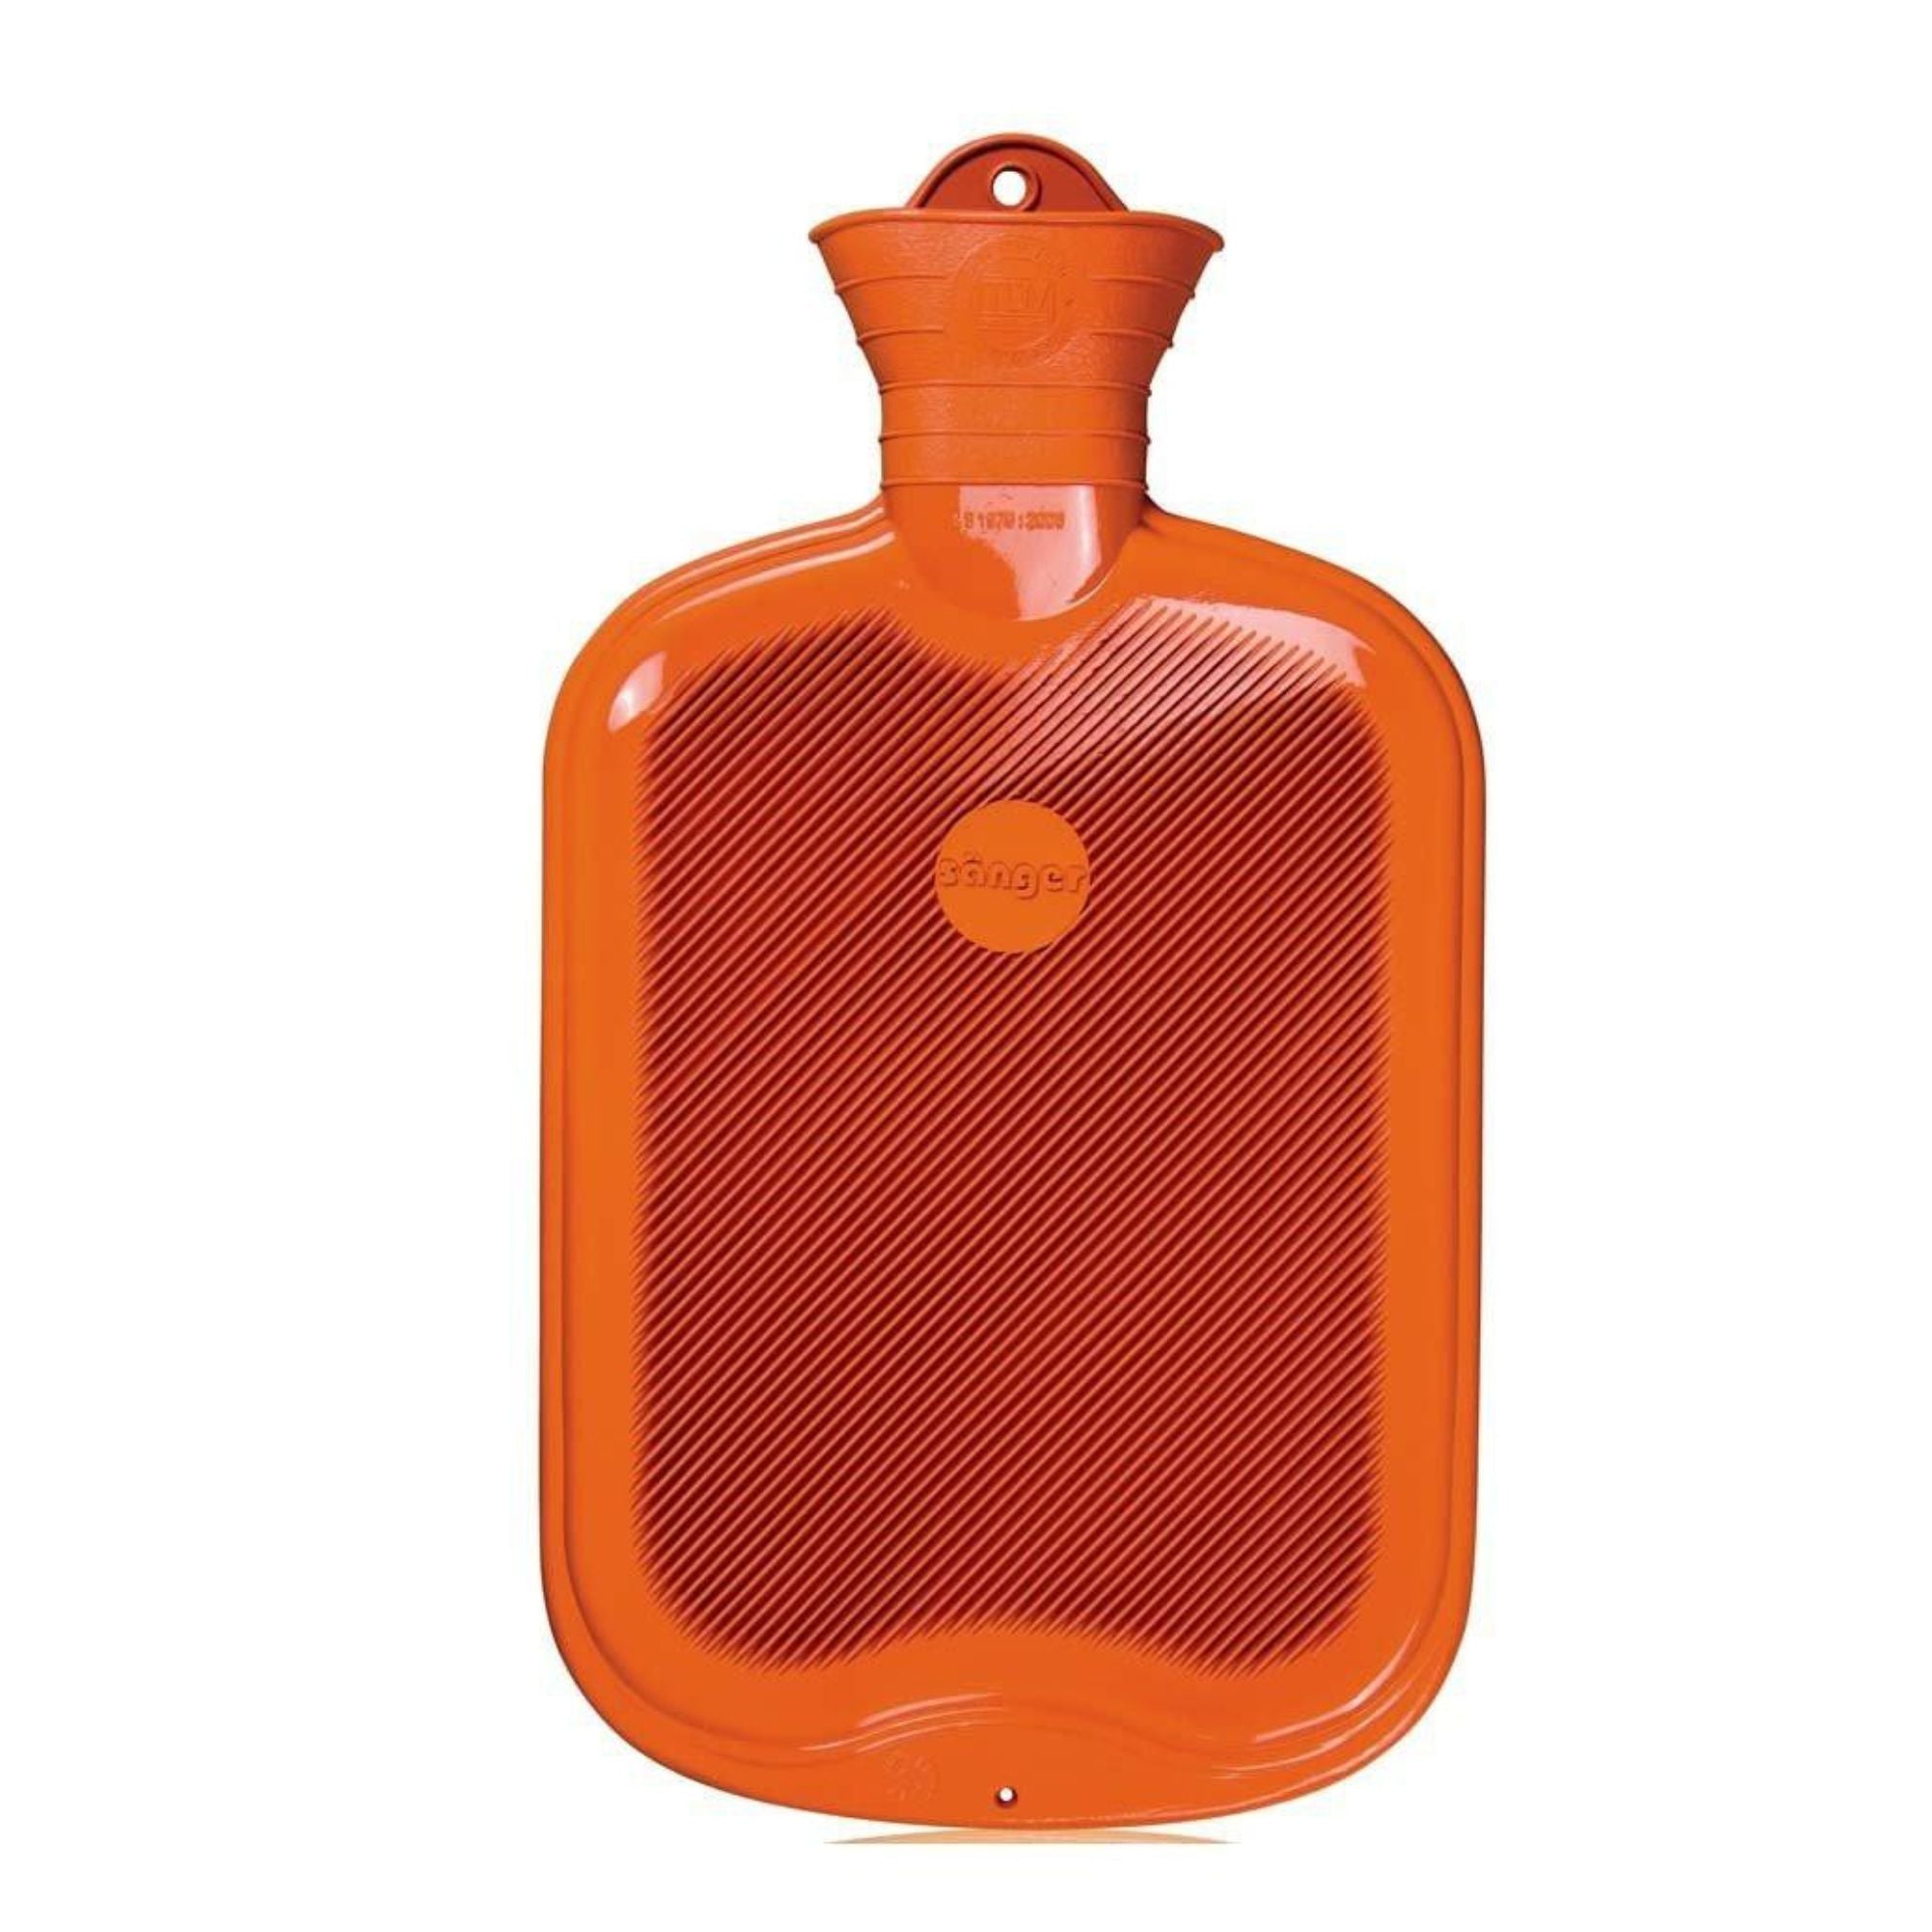 2 Litre Orange Sanger Hot Water Bottle